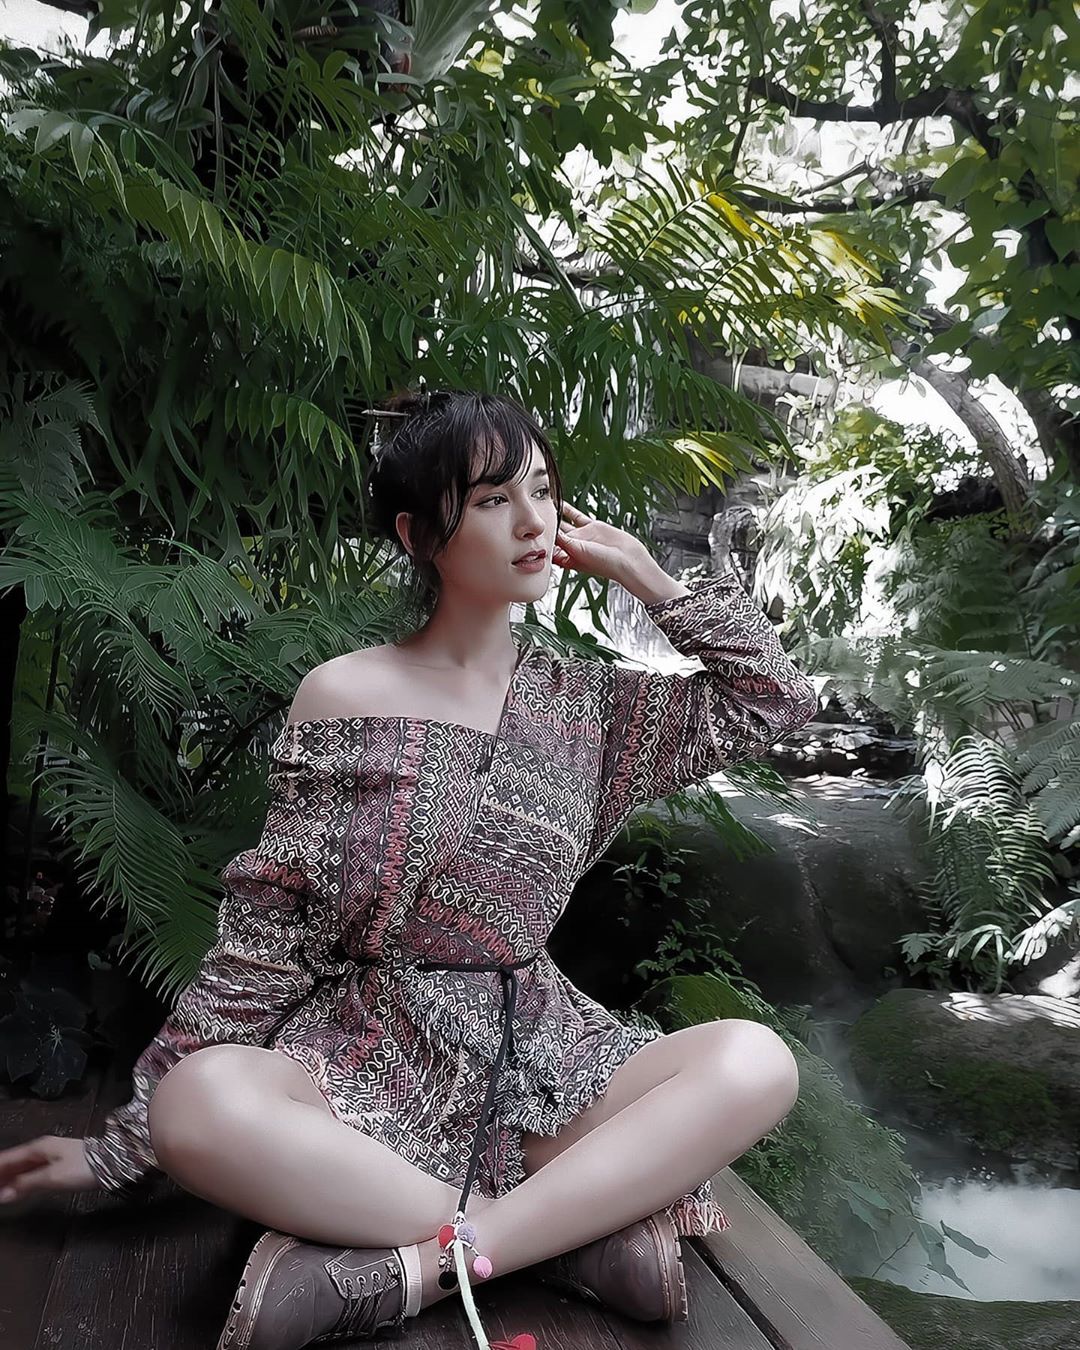 Benz Thipsuda – Most Beautiful Thailand Transgender Model Instagram